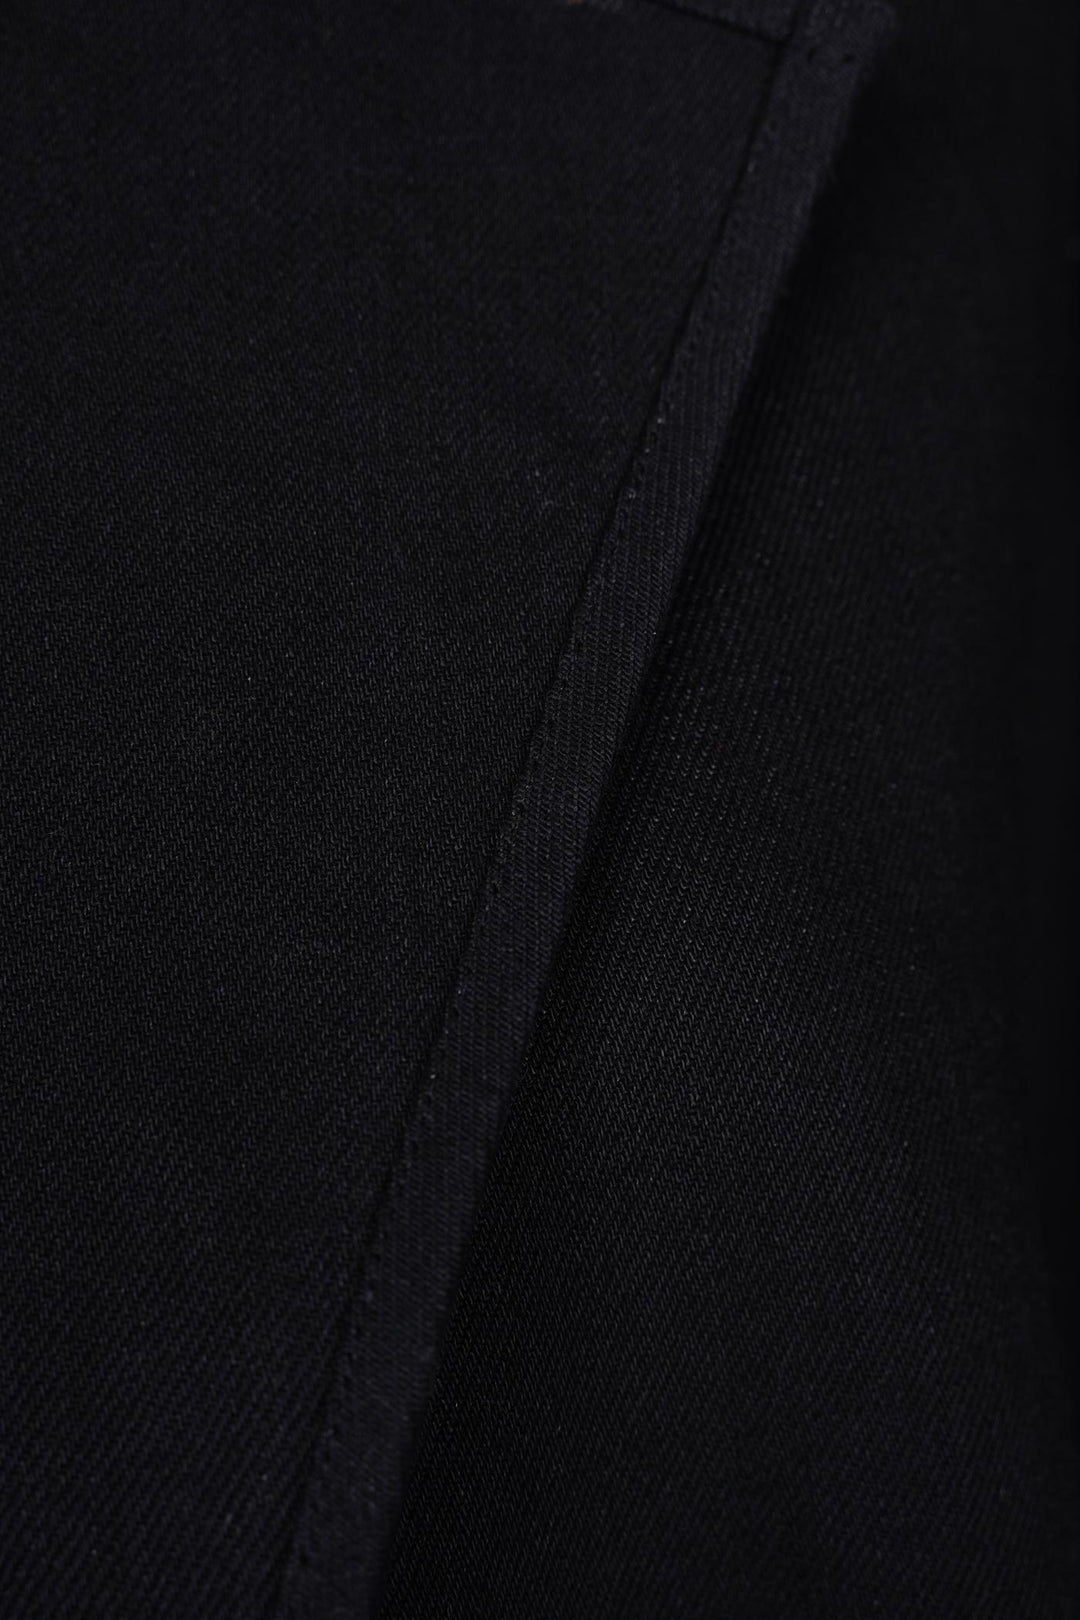 Reversible Japanese Stiff Black Denim Jacket